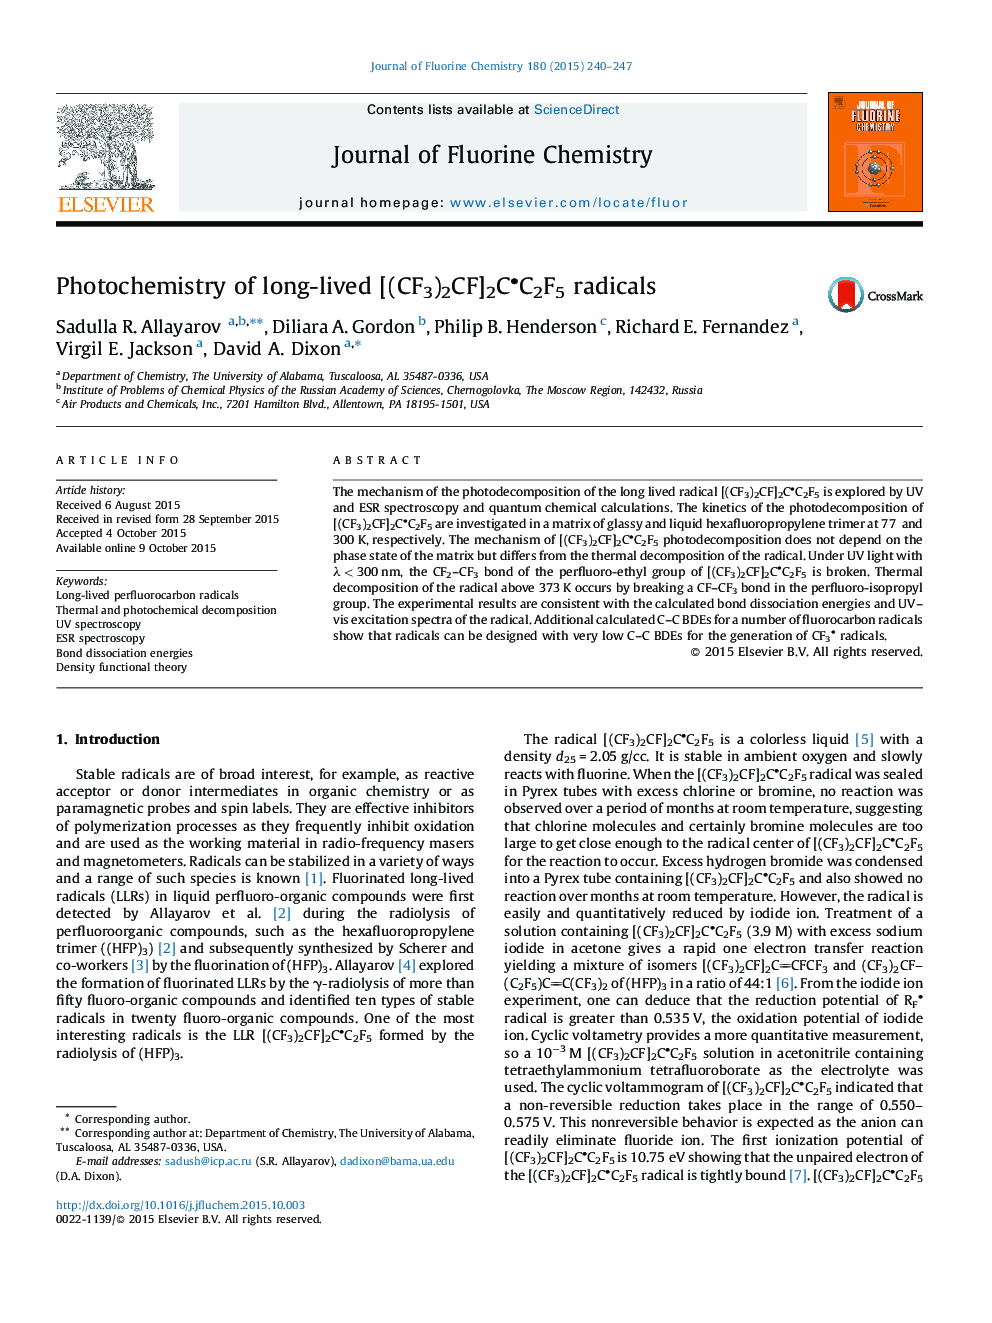 Photochemistry of long-lived [(CF3)2CF]2CC2F5 radicals